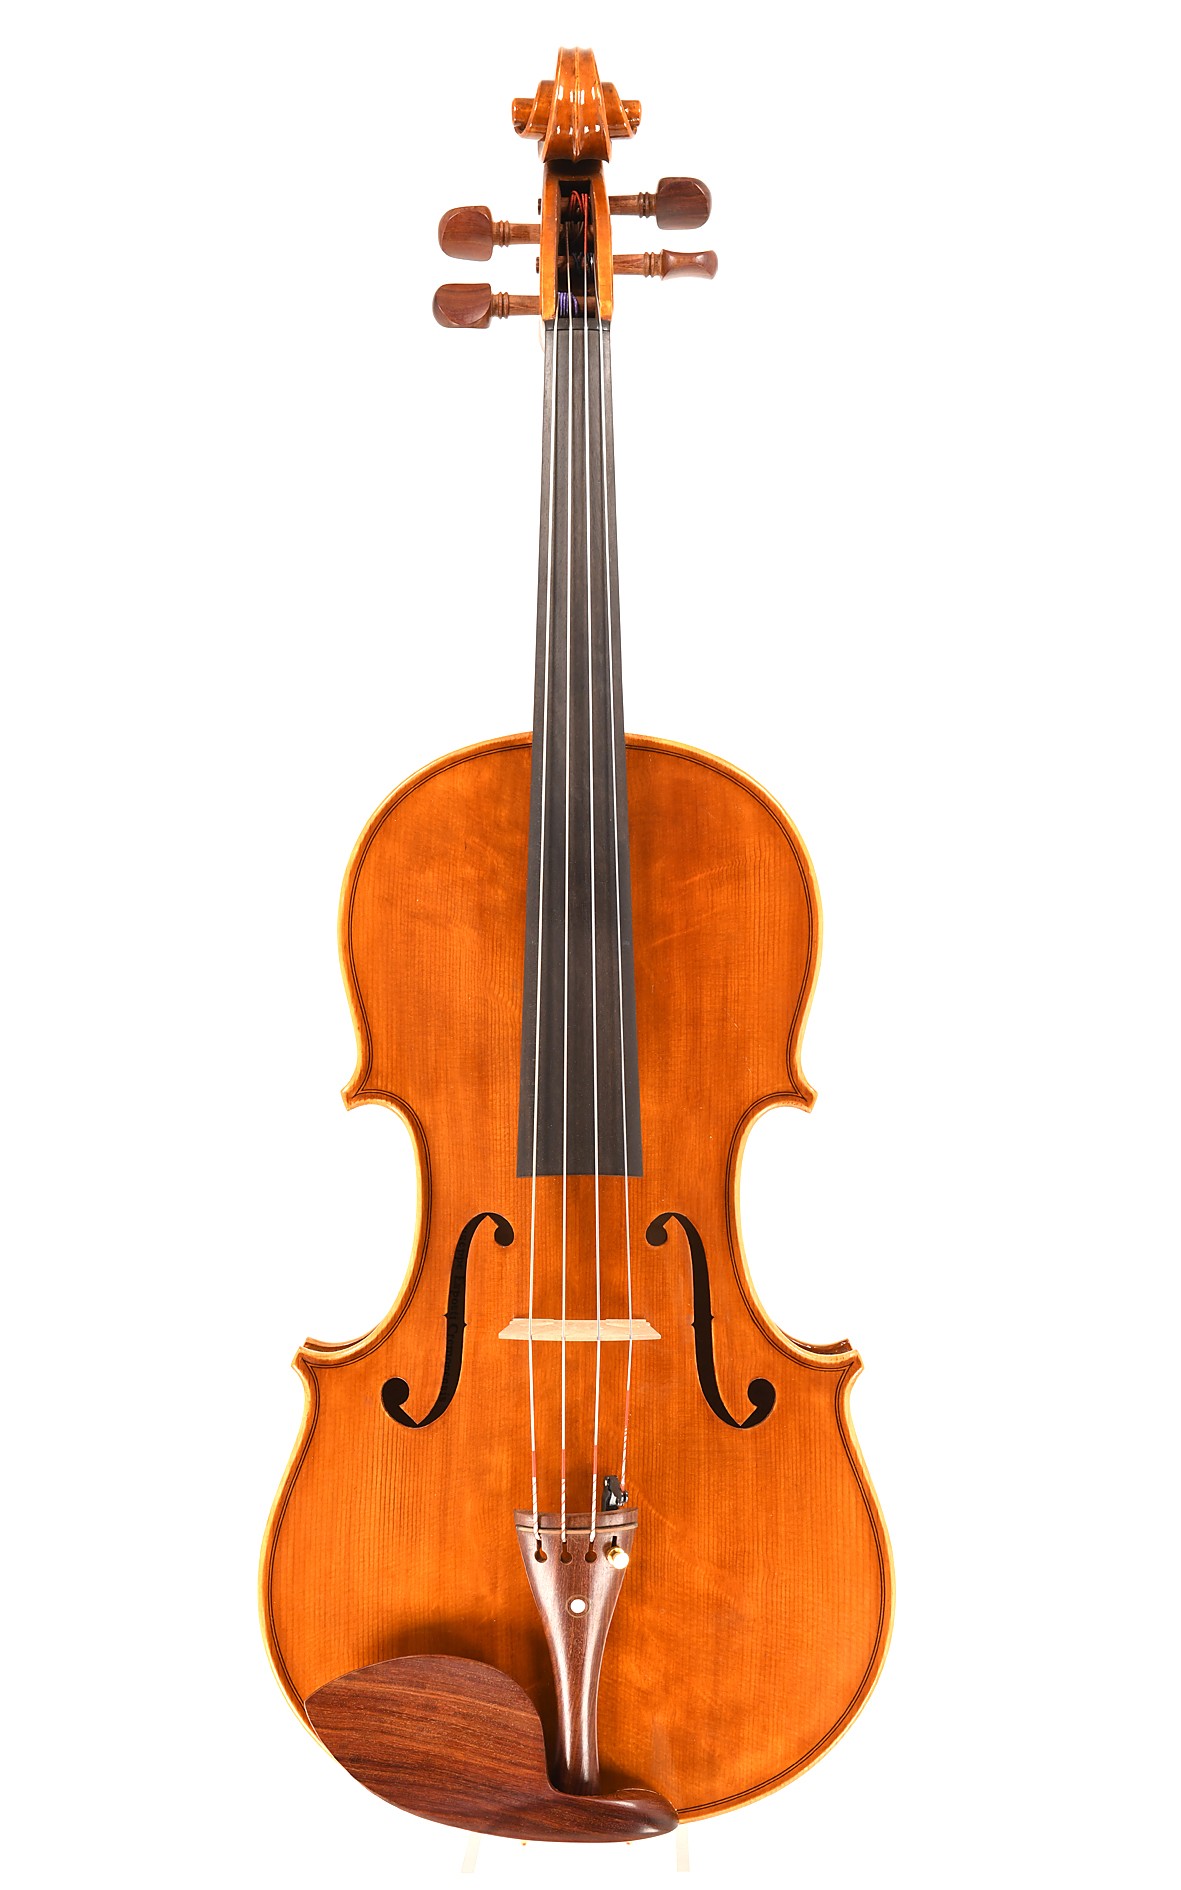 Modern Italian viola from Cremona: Piergiuseppe Esposti